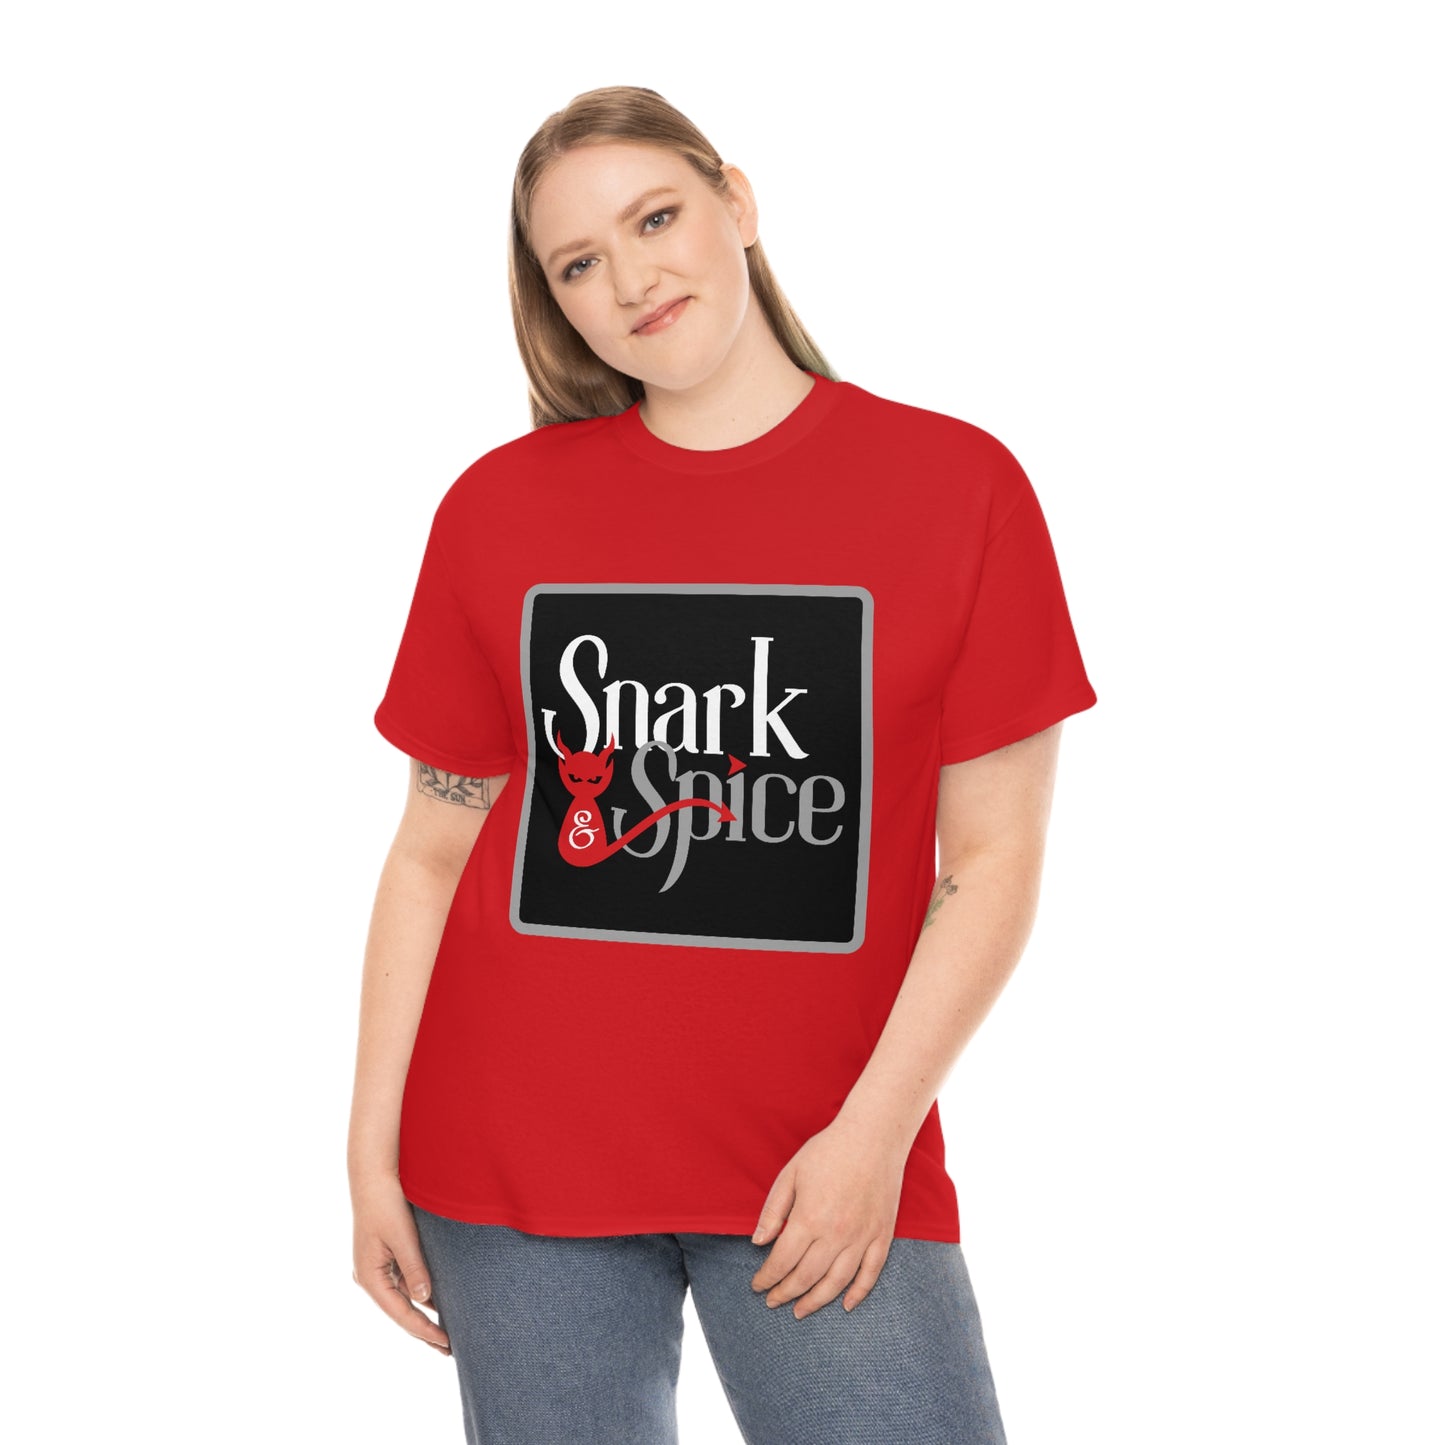 Snark & Spice Gift Shop Unisex Cotton T-shirt